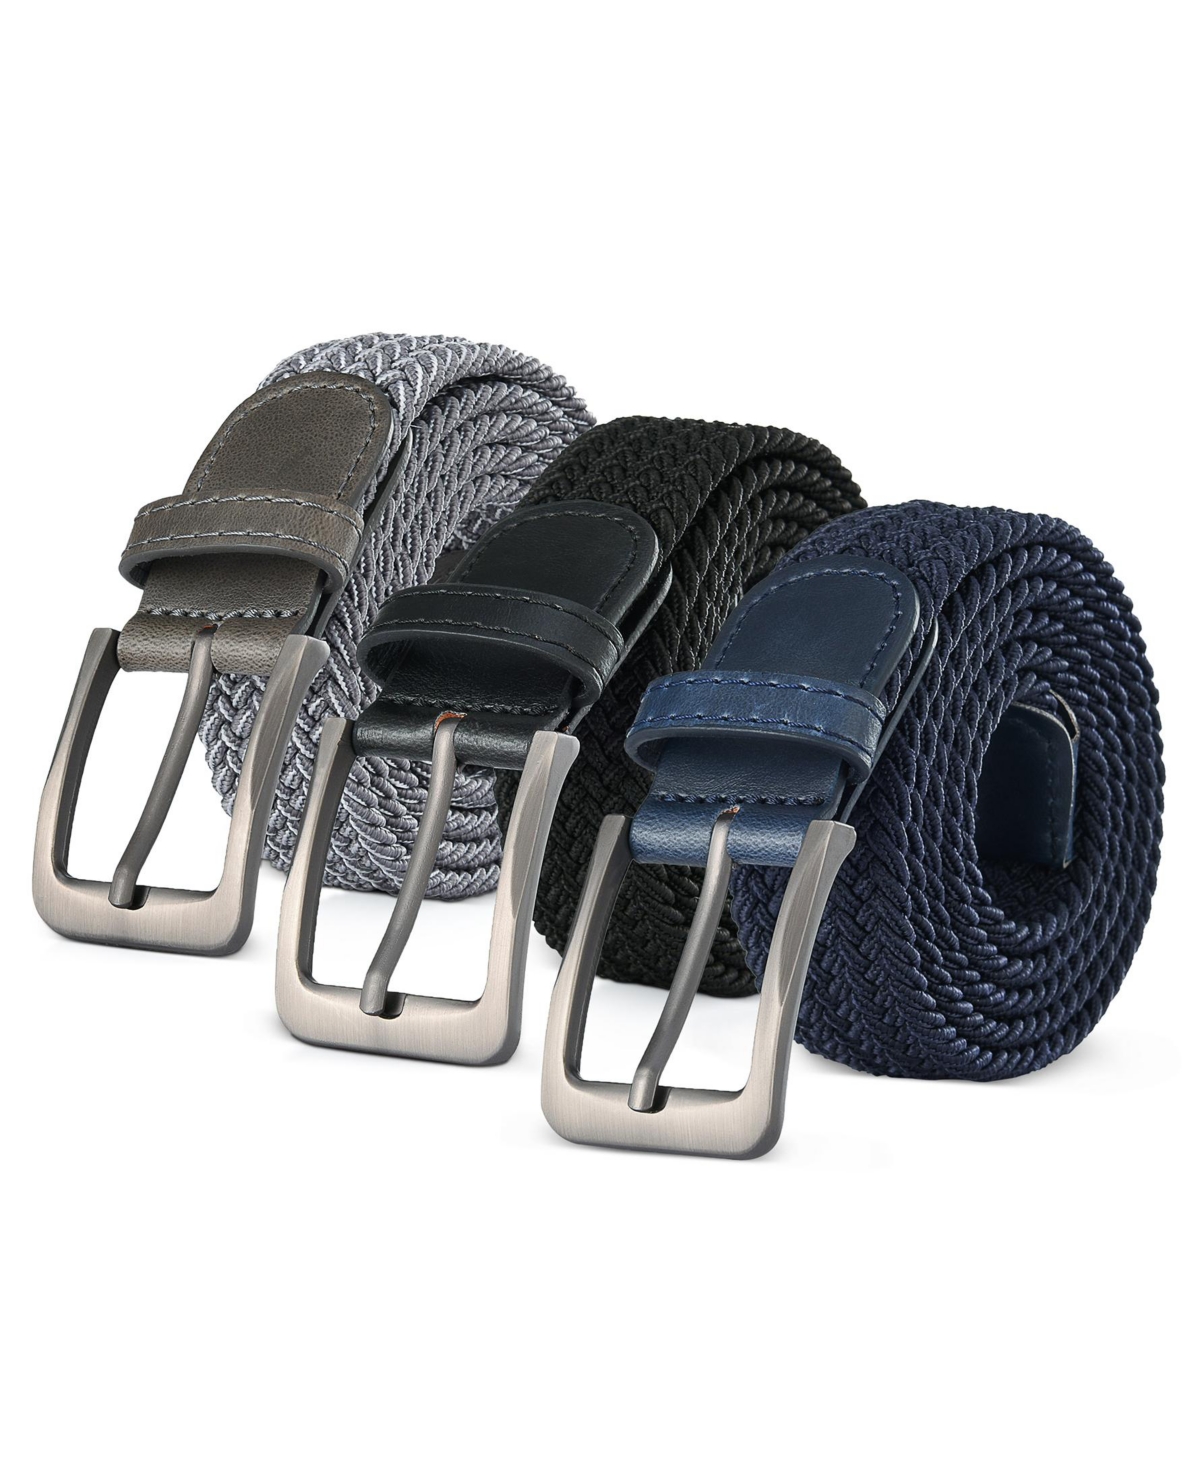 Men's Elastic Braided Stretch Belt Pack of 3 - Navy/black/brown